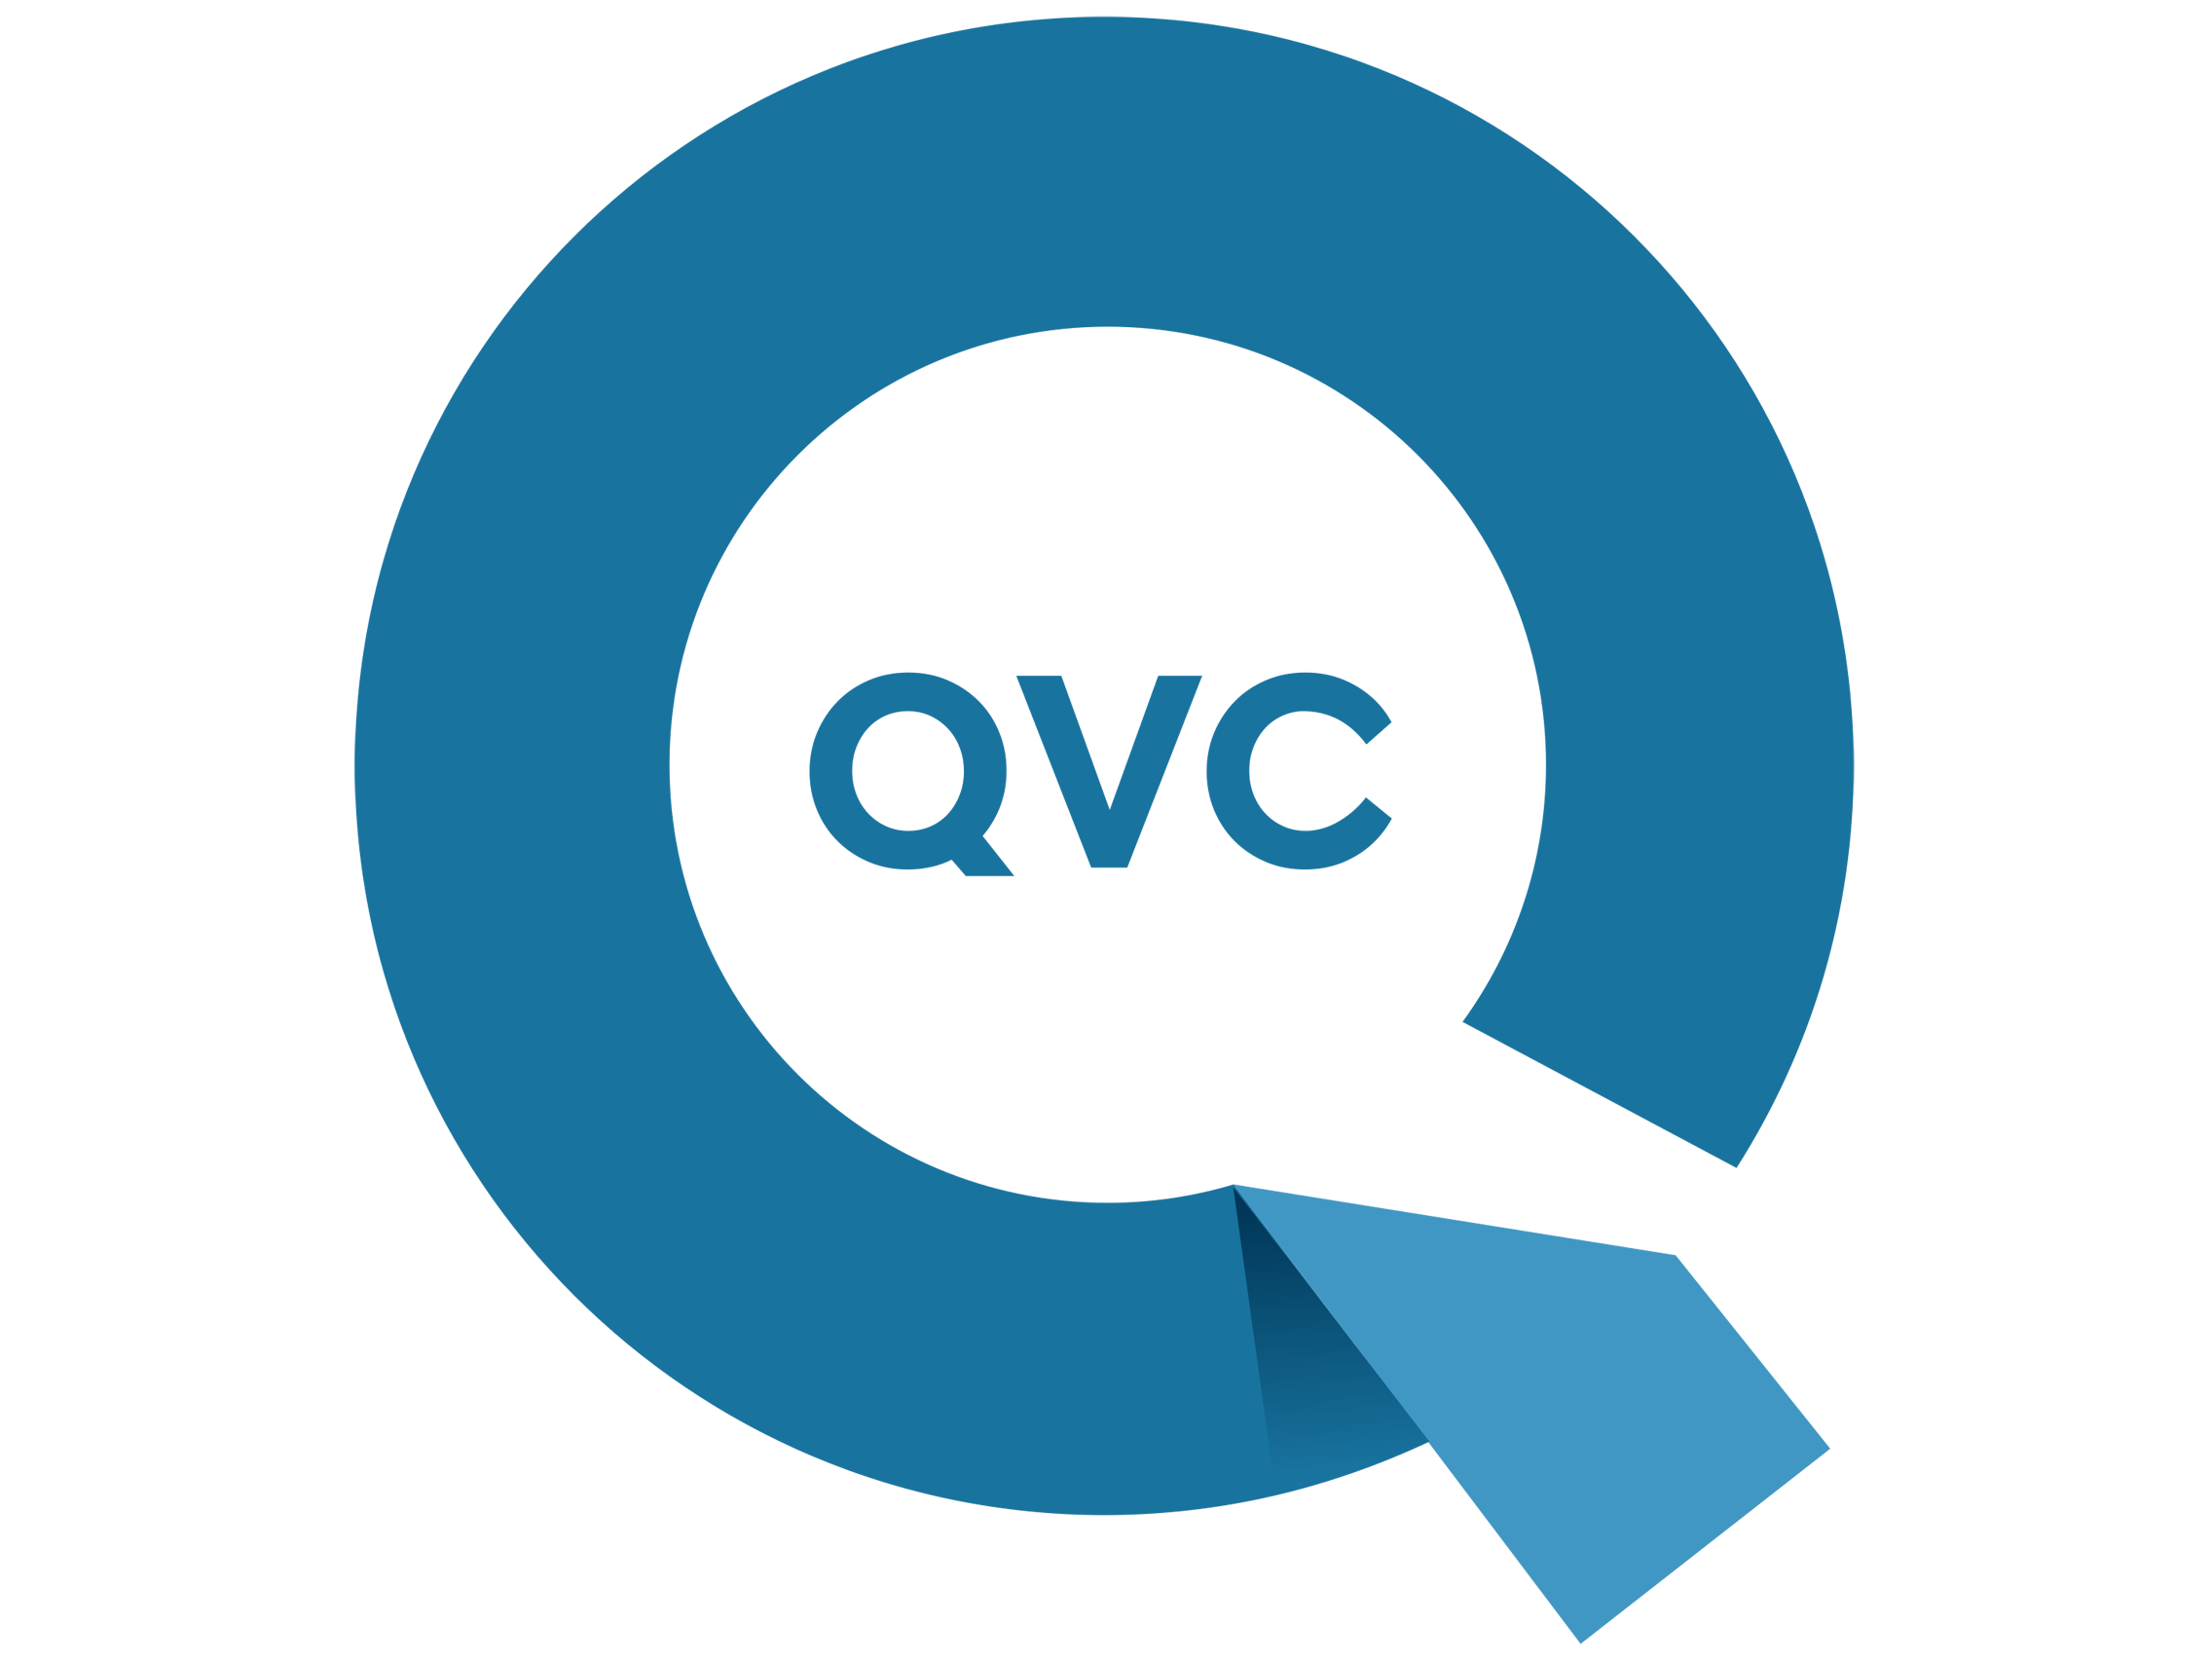 QVC-Storage and Order Fulfilment